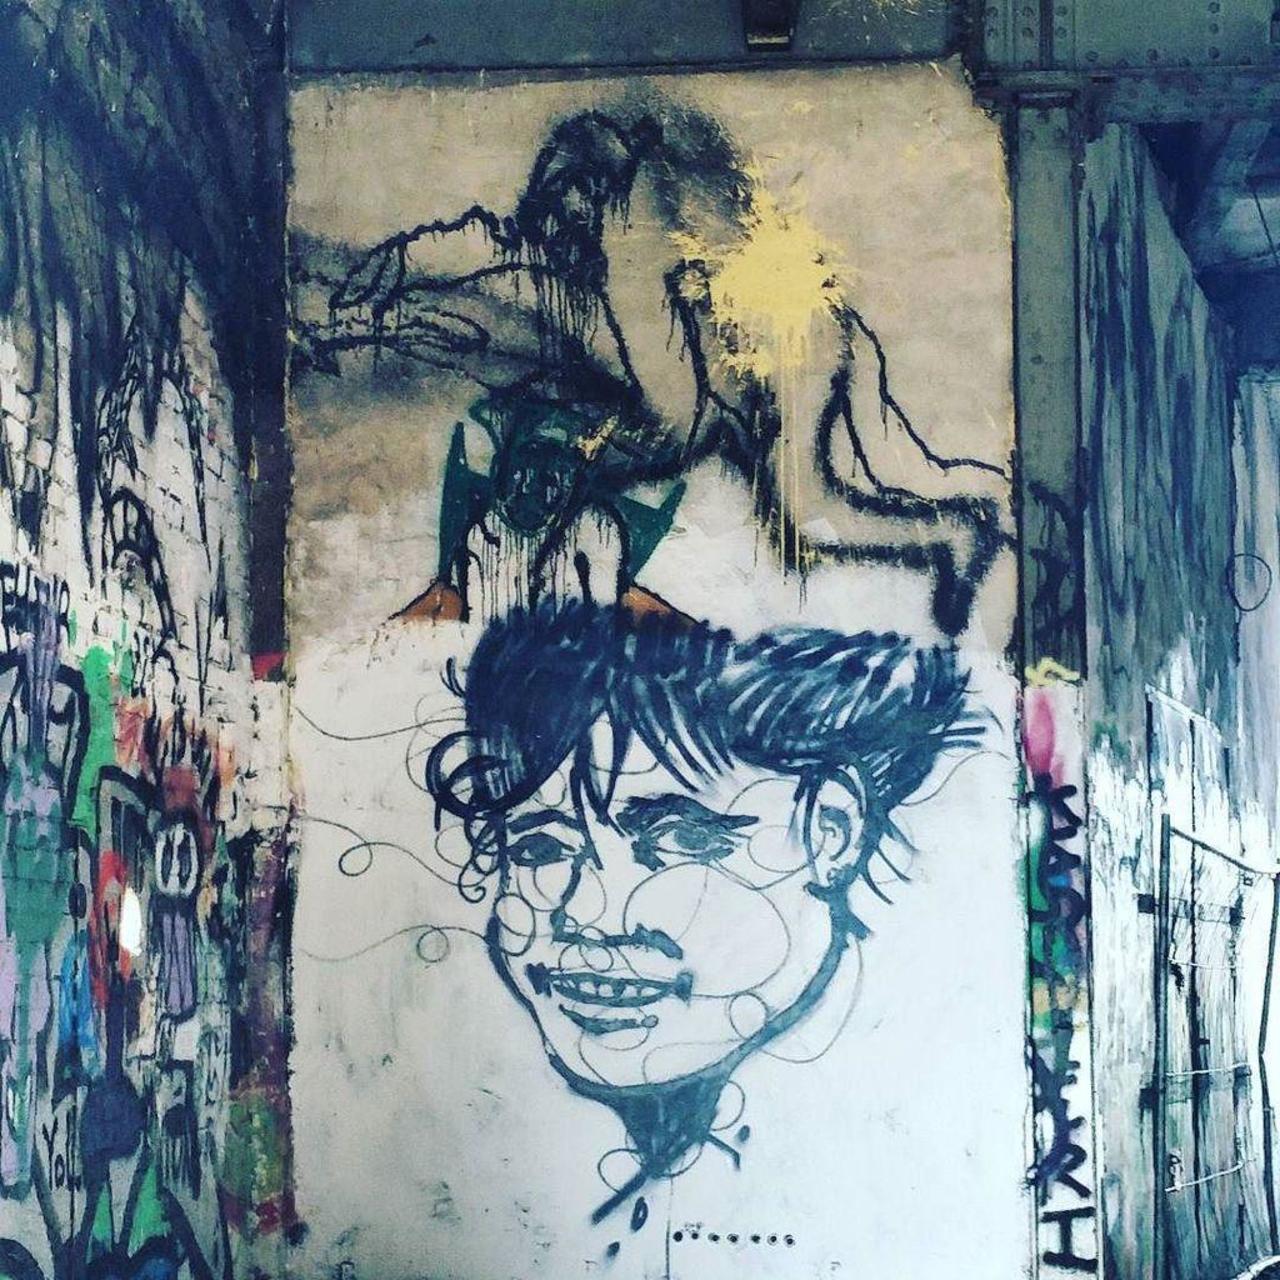 #art #streetart #streetartberlin #graffiti #tags #graffitiart #urbanart #berlin #germany # by dondale75 http://t.co/hSmj2Qjt0J